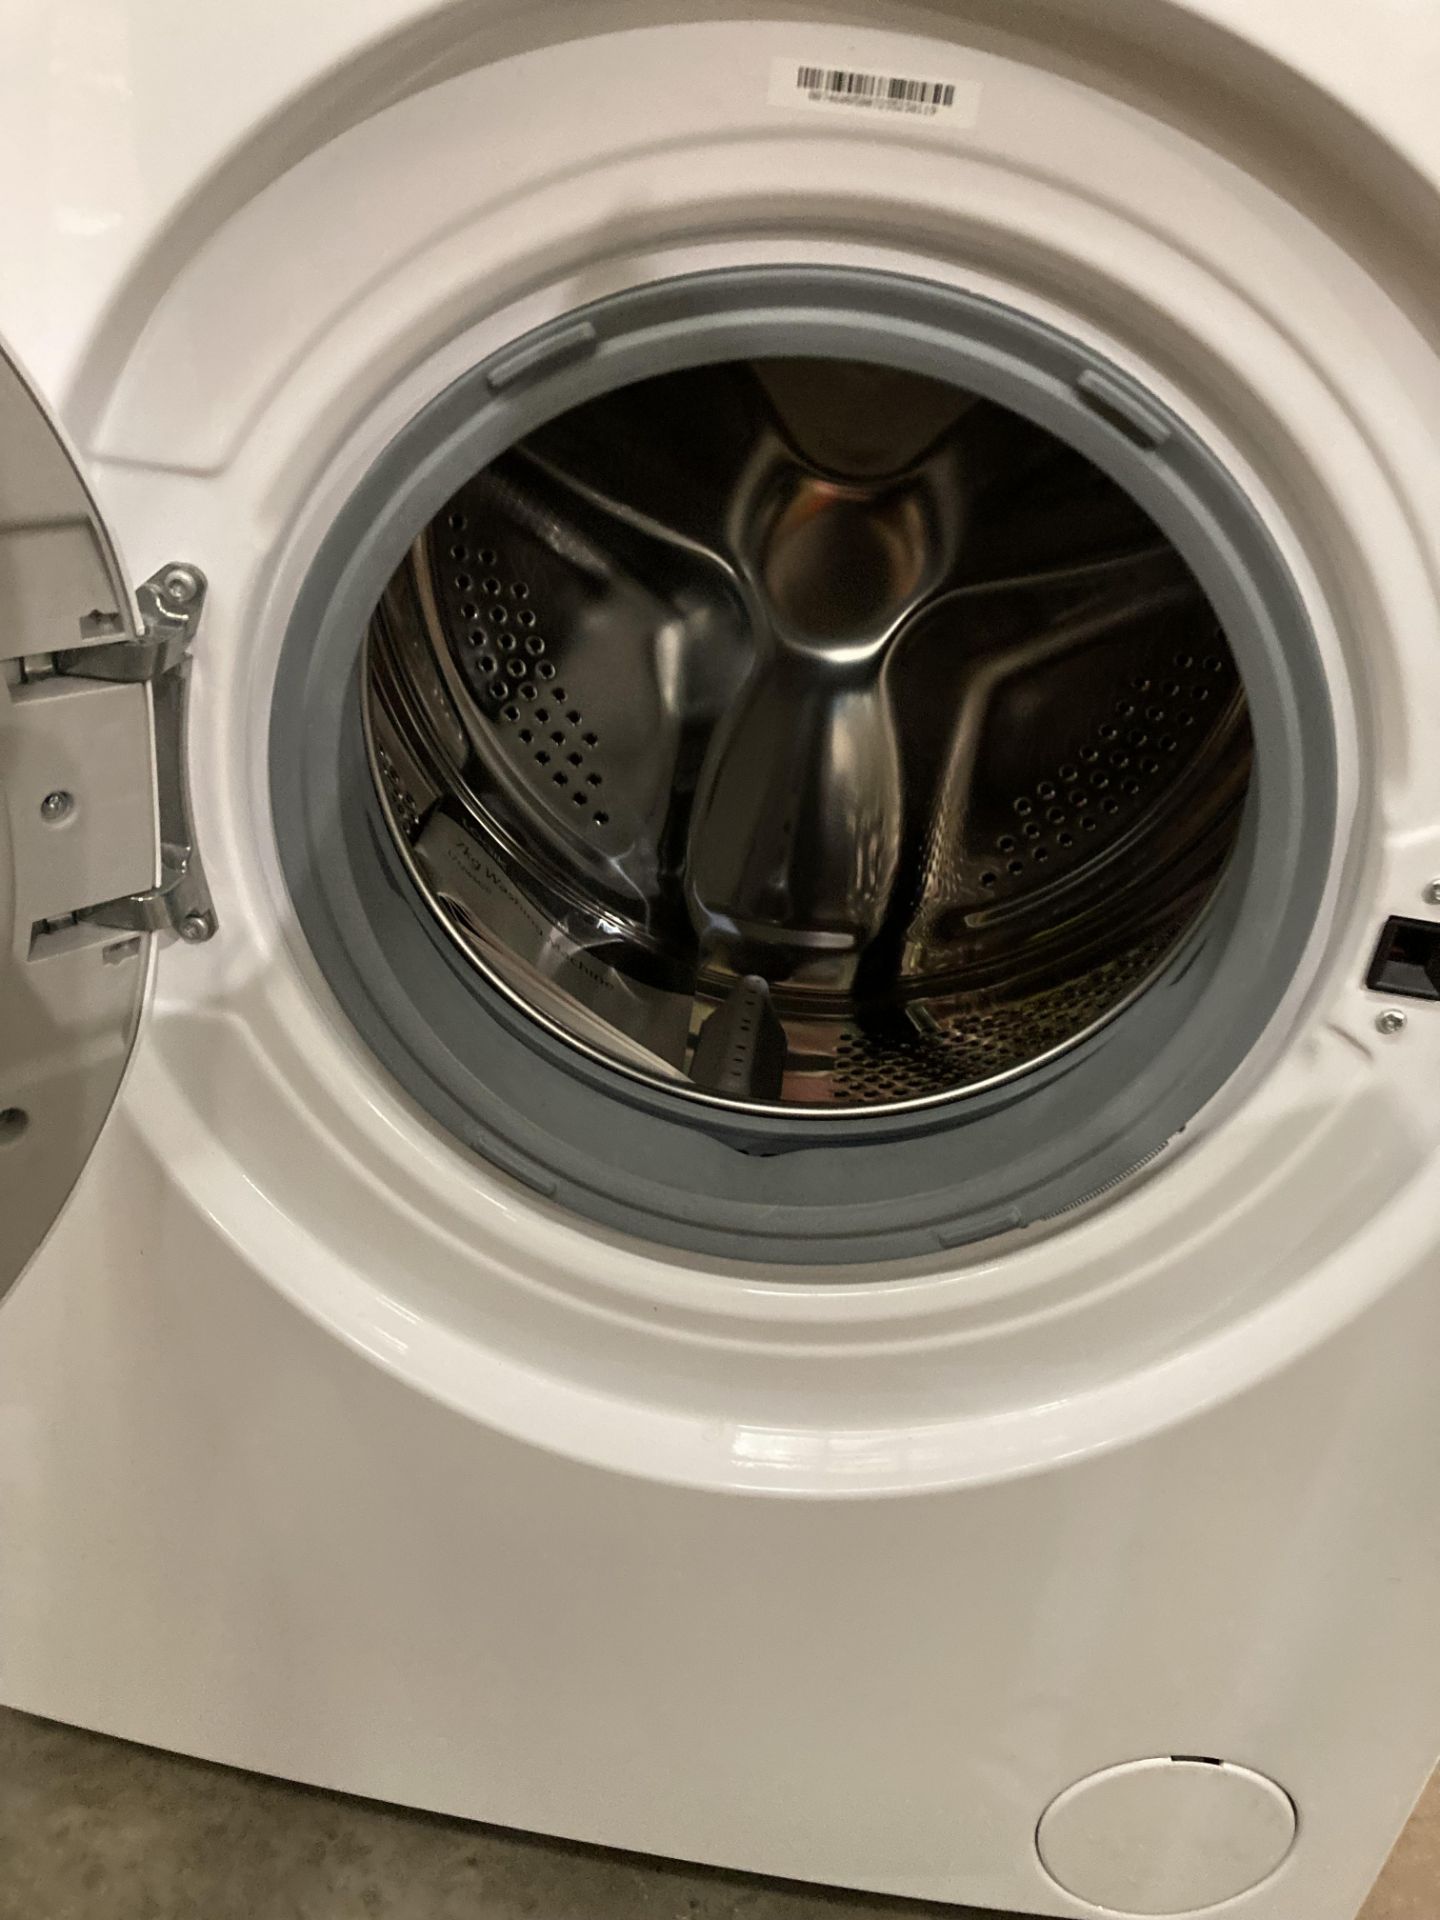 Logik L712MW20 washing machine (PO) - Image 2 of 2